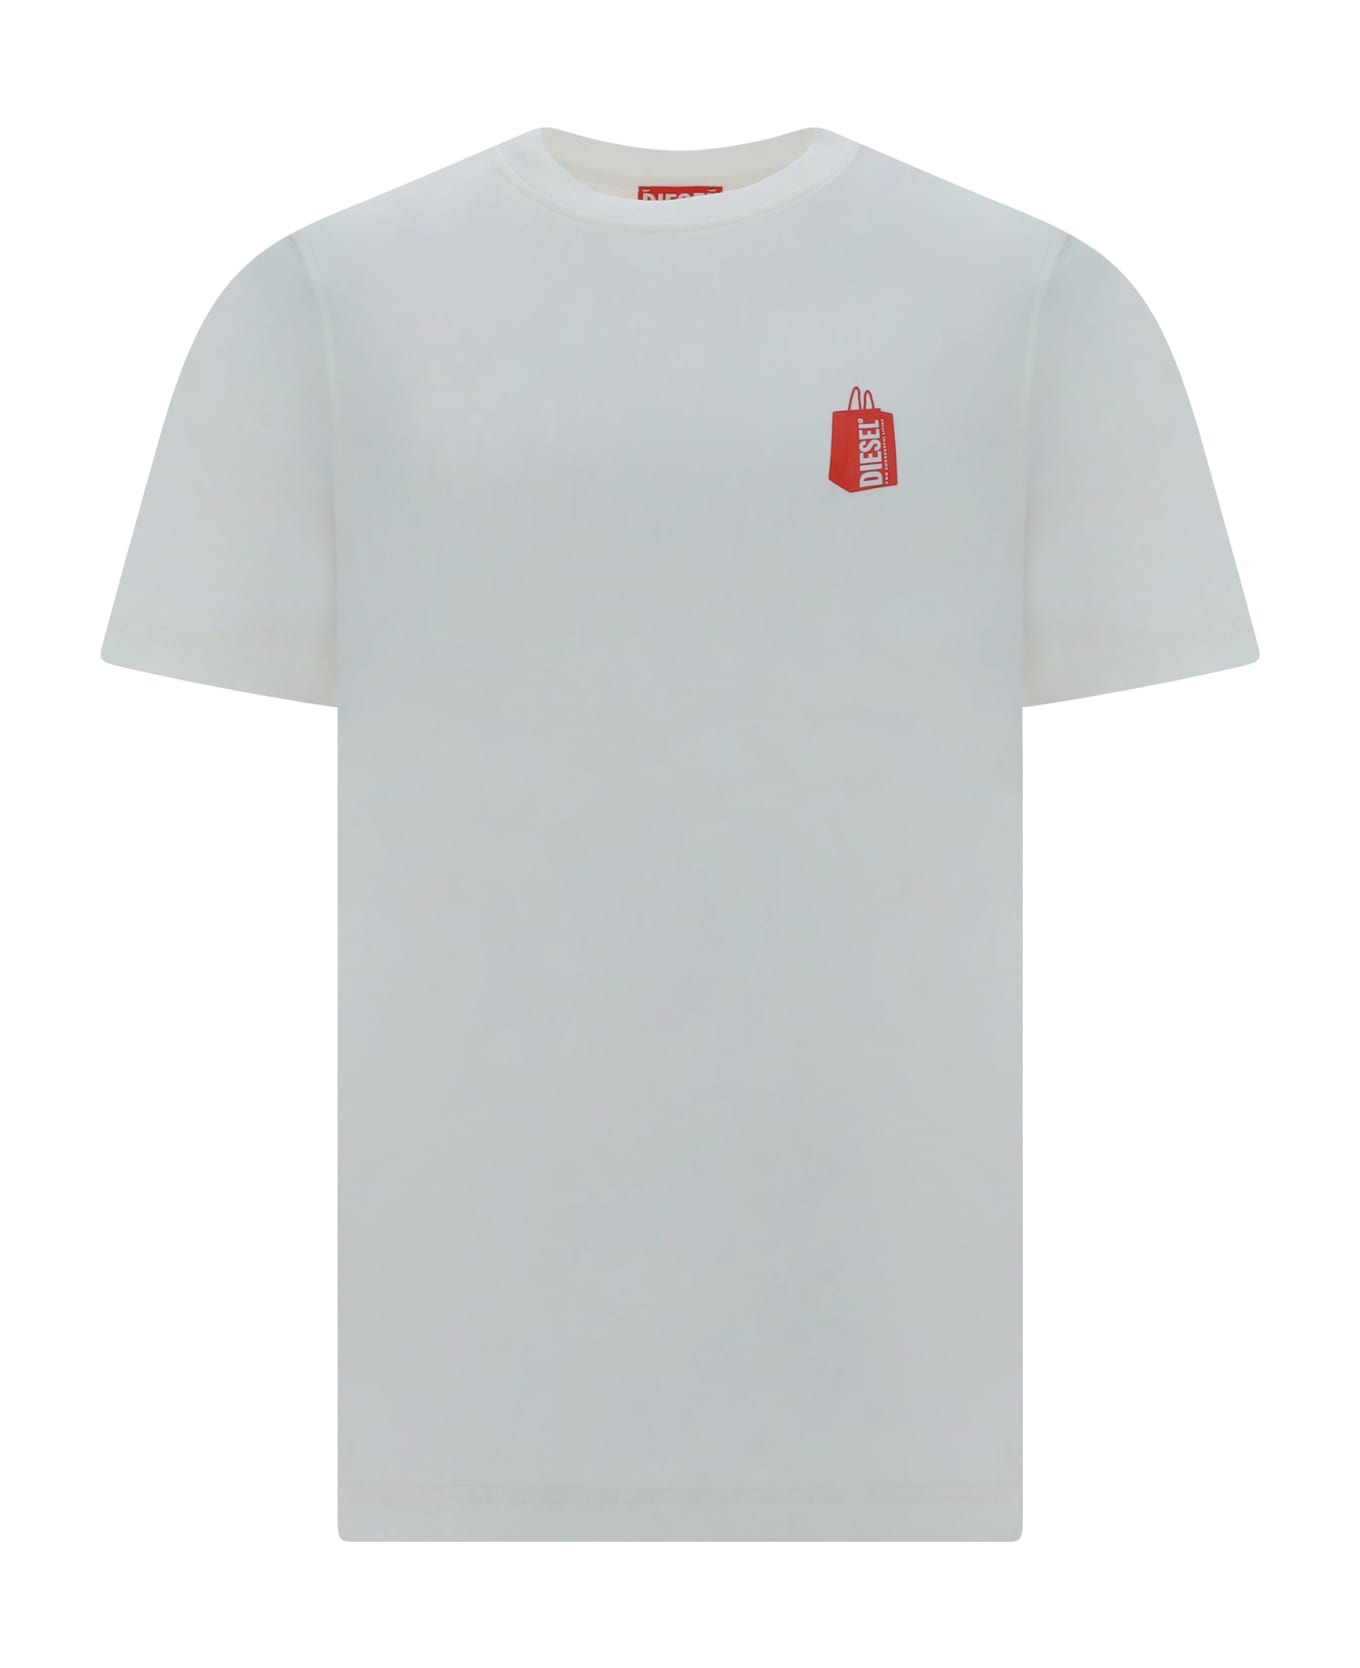 Diesel T-shirt - 104 - Off/white シャツ